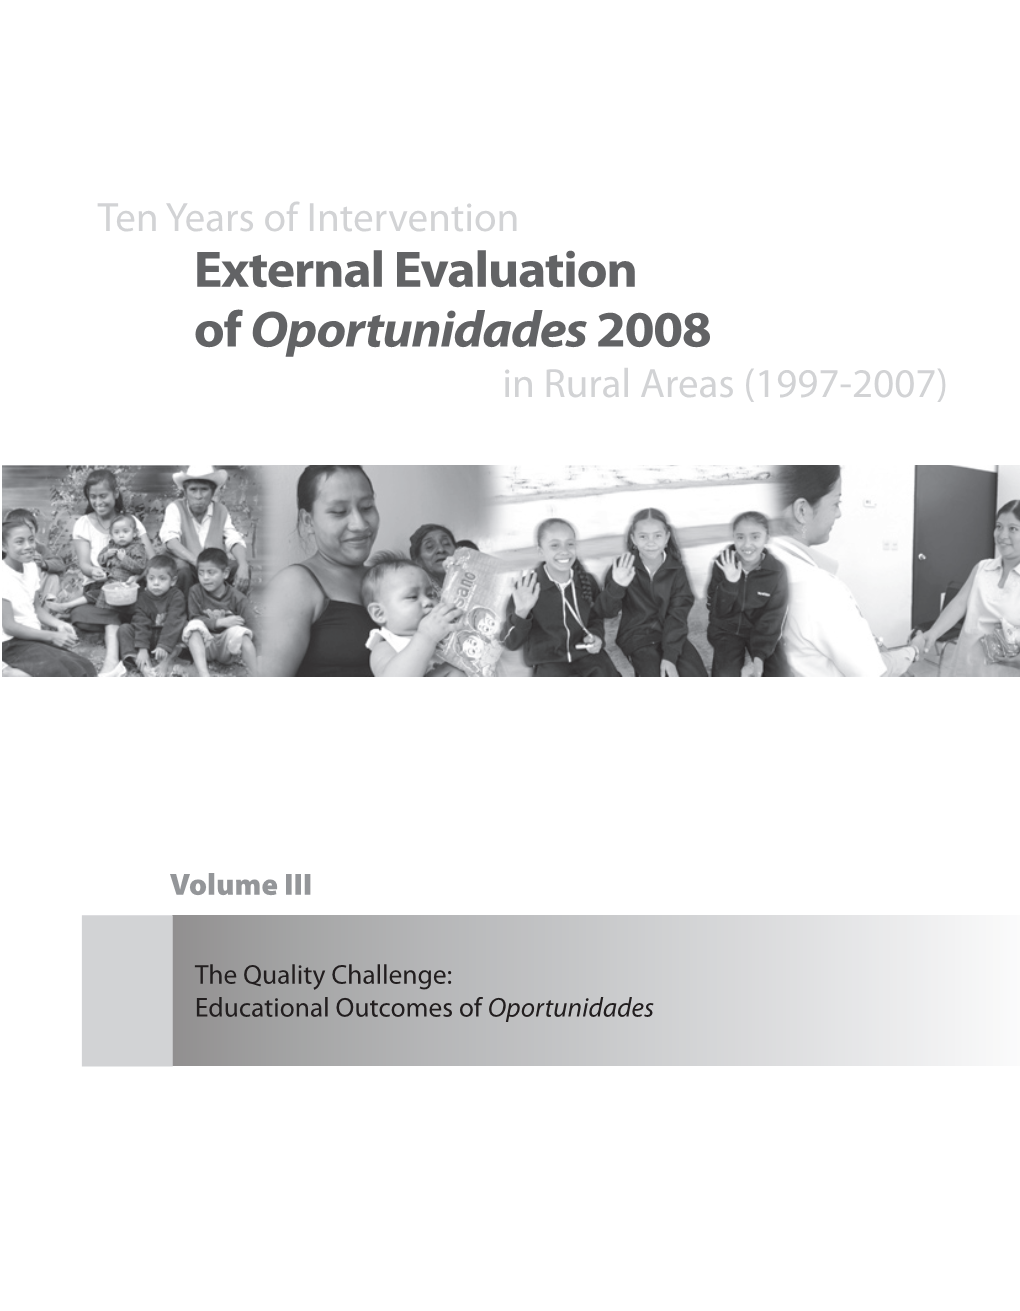 External Evaluation of Oportunidades2008